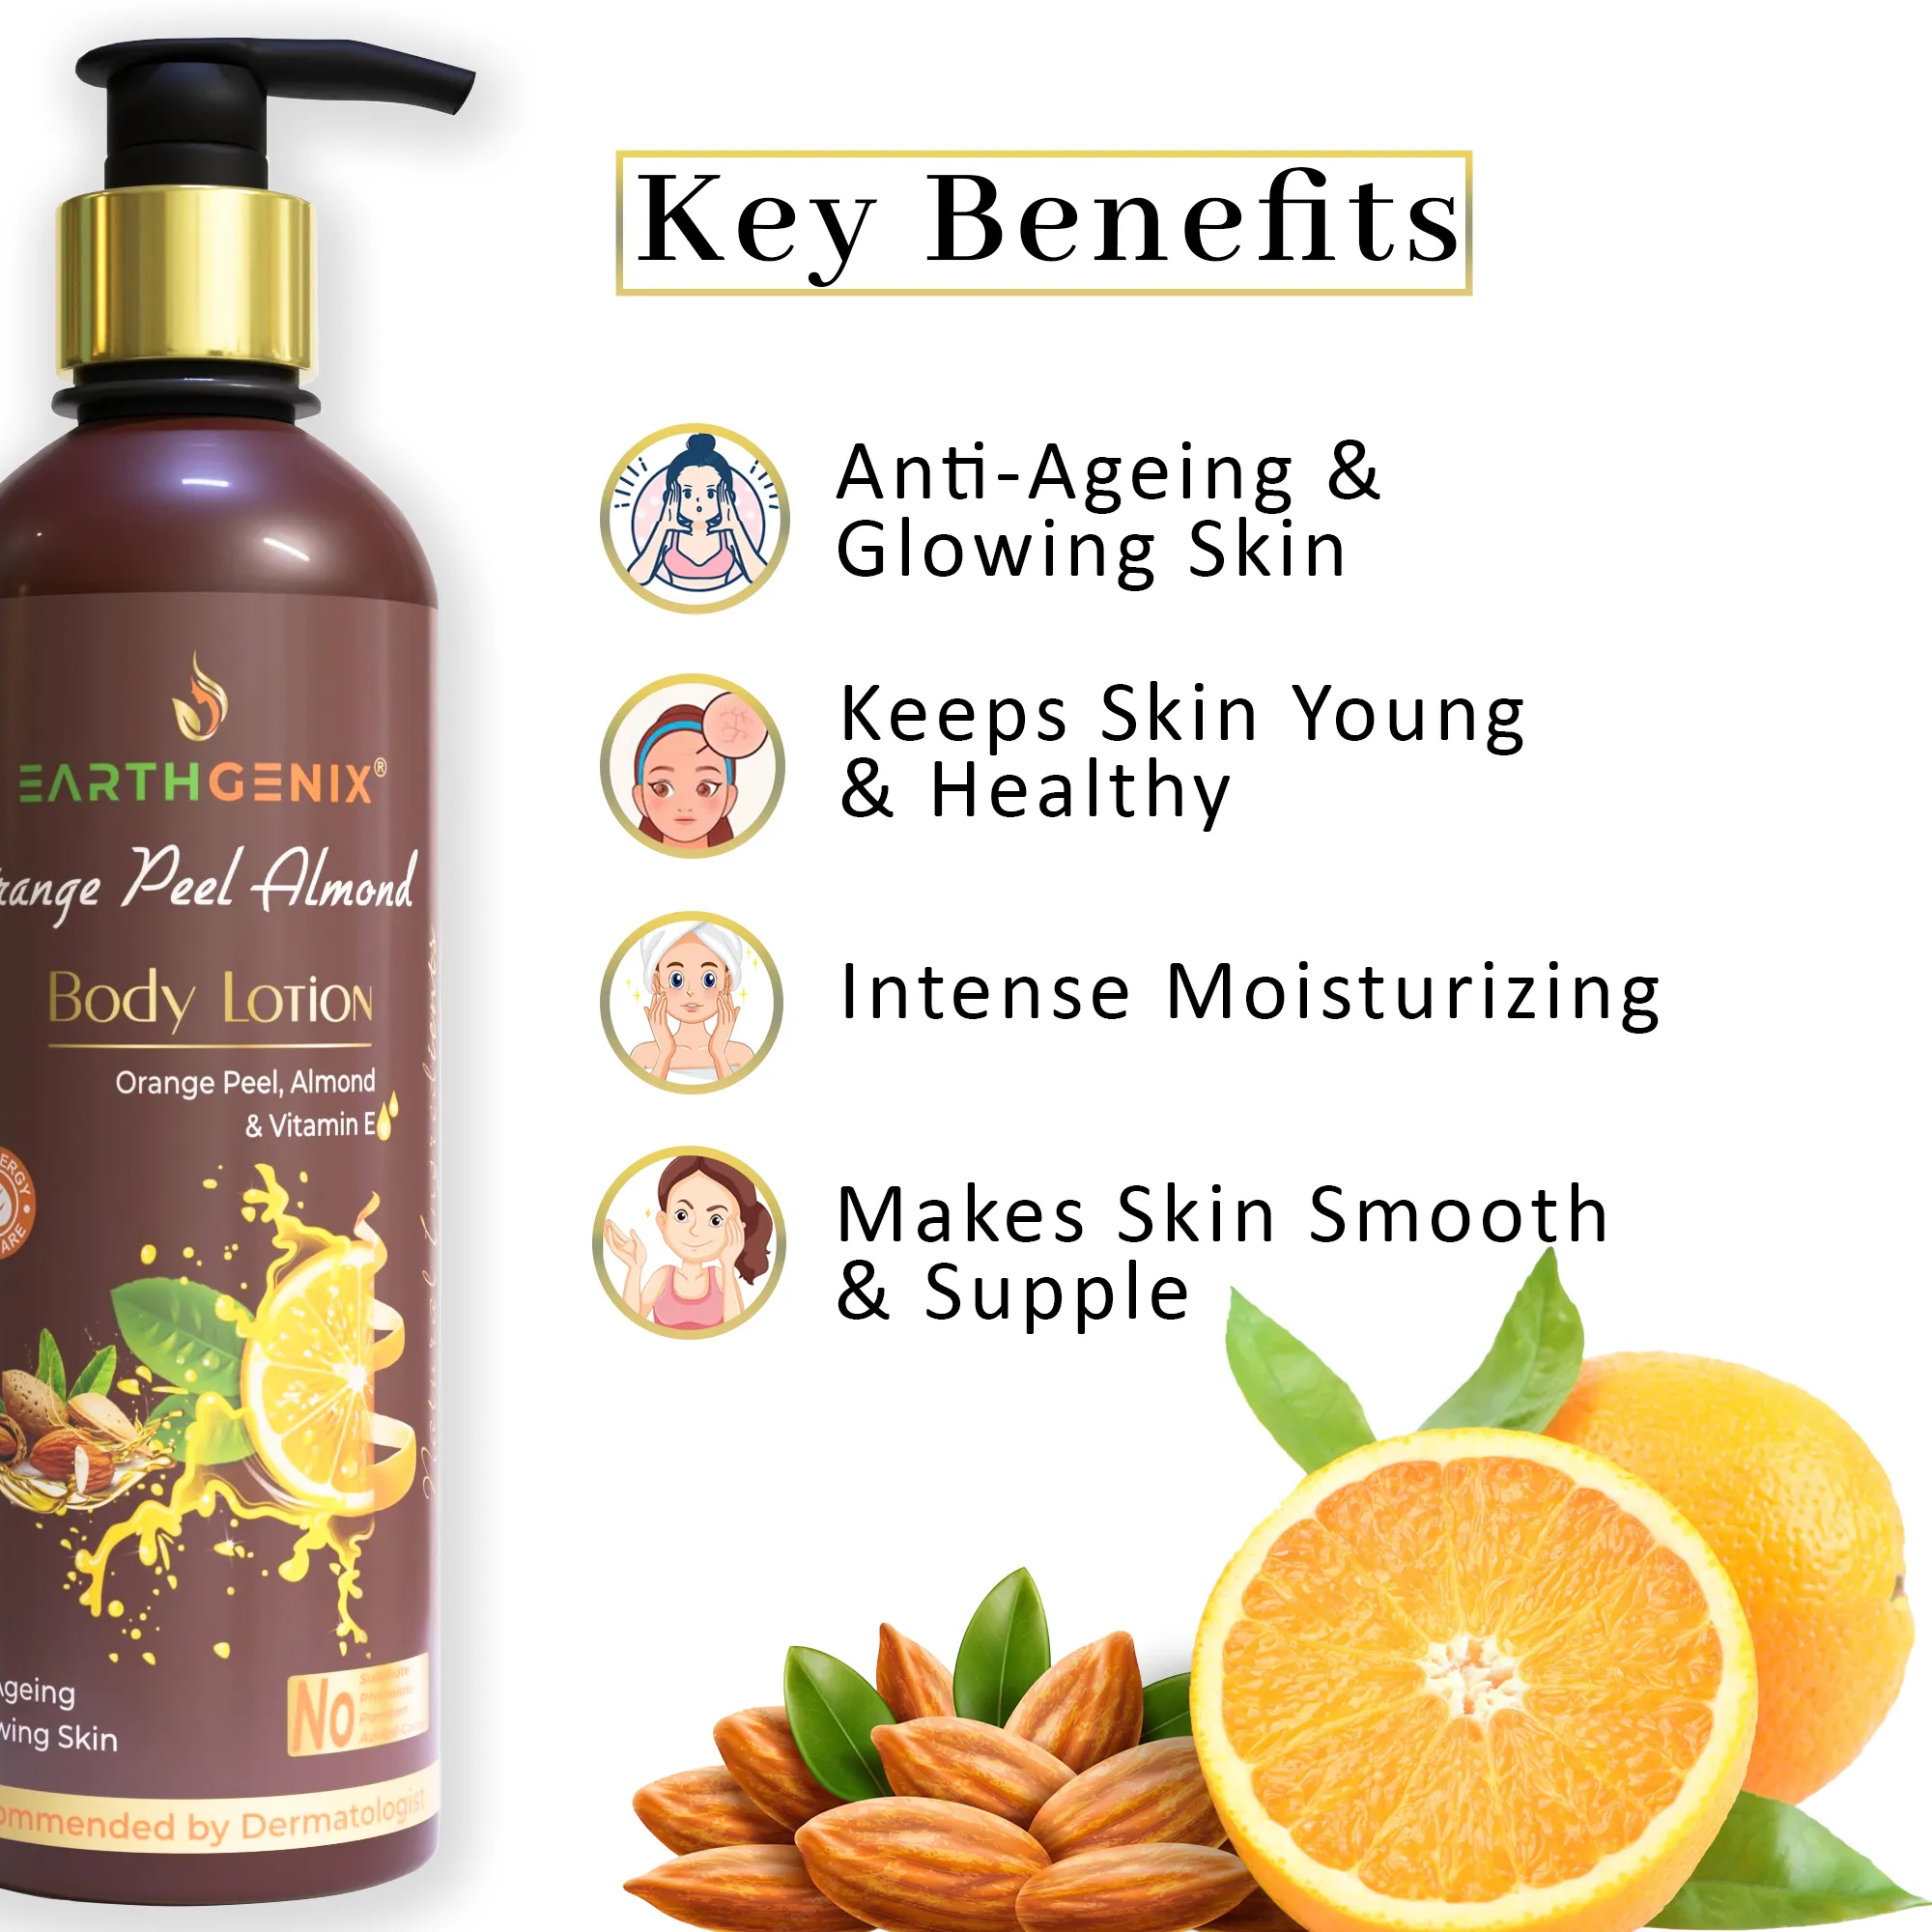 Earthgenix | Orange Peel Almond Body Lotion With Vitamin E 400+100ml (25%  Free), For Anti-Ageing & Glowing Skin